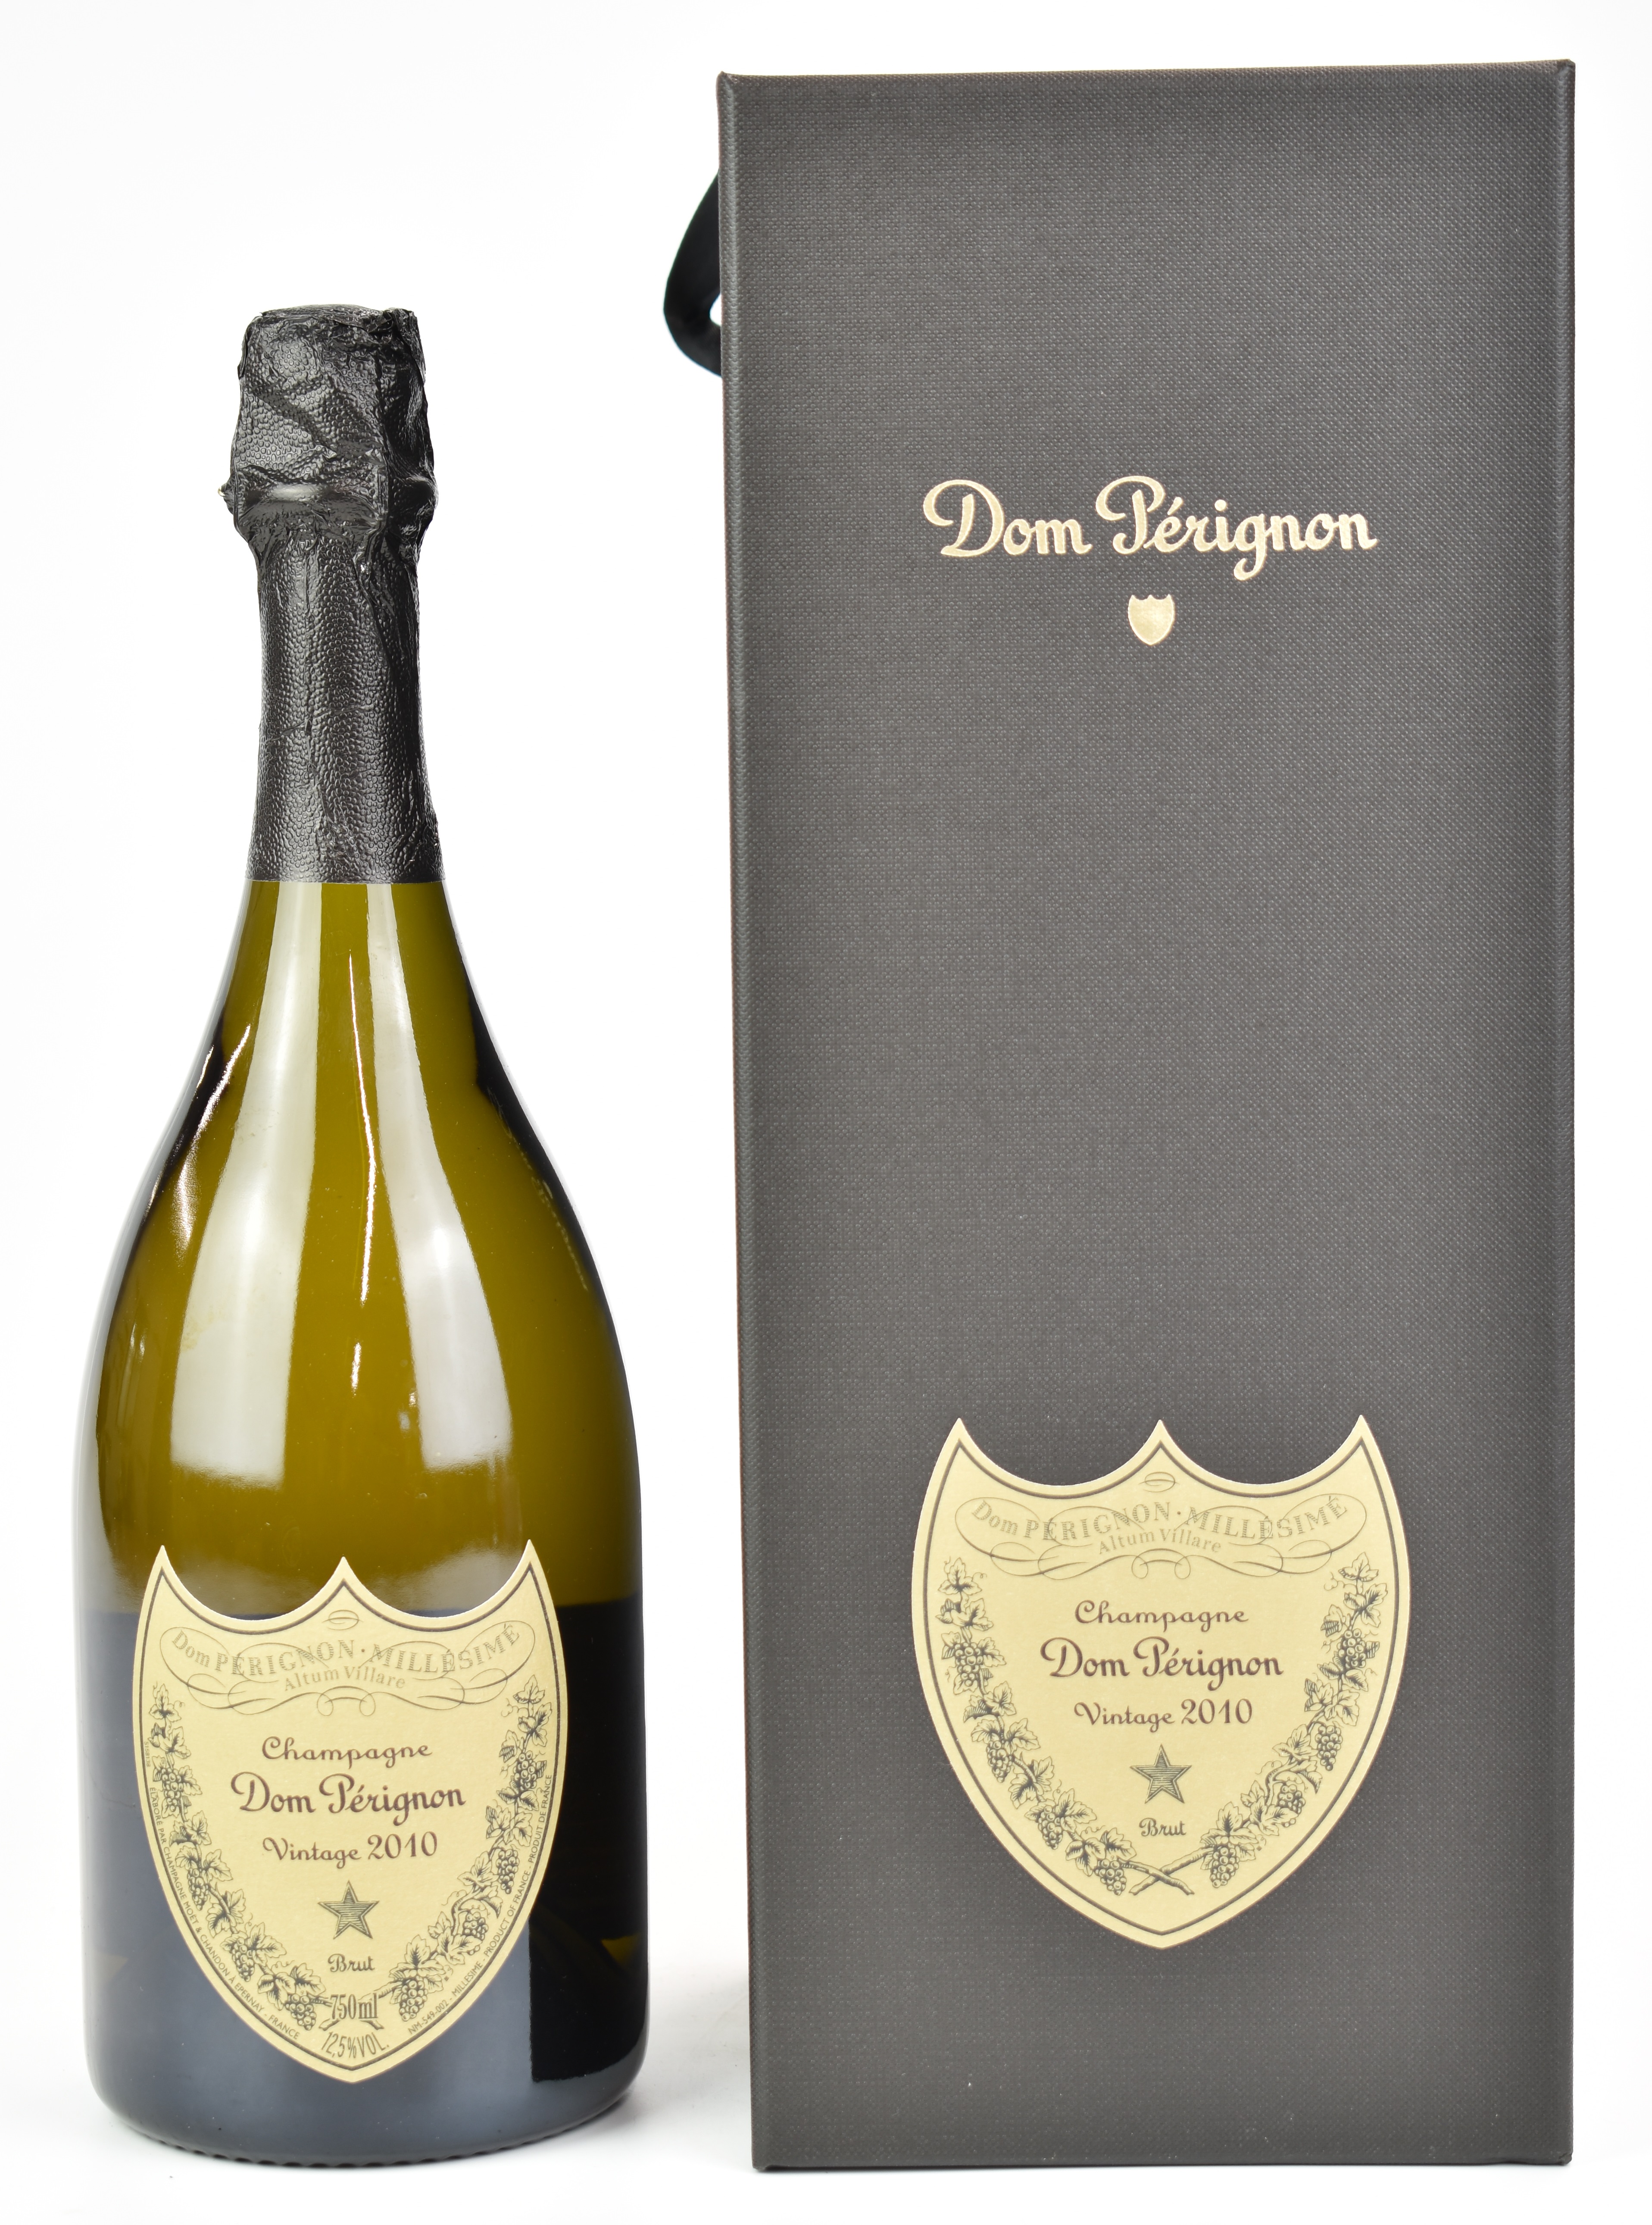 Dom Pérignon Vintage 2010 Champagne, 750ml, 12.5% vol, with presentation box